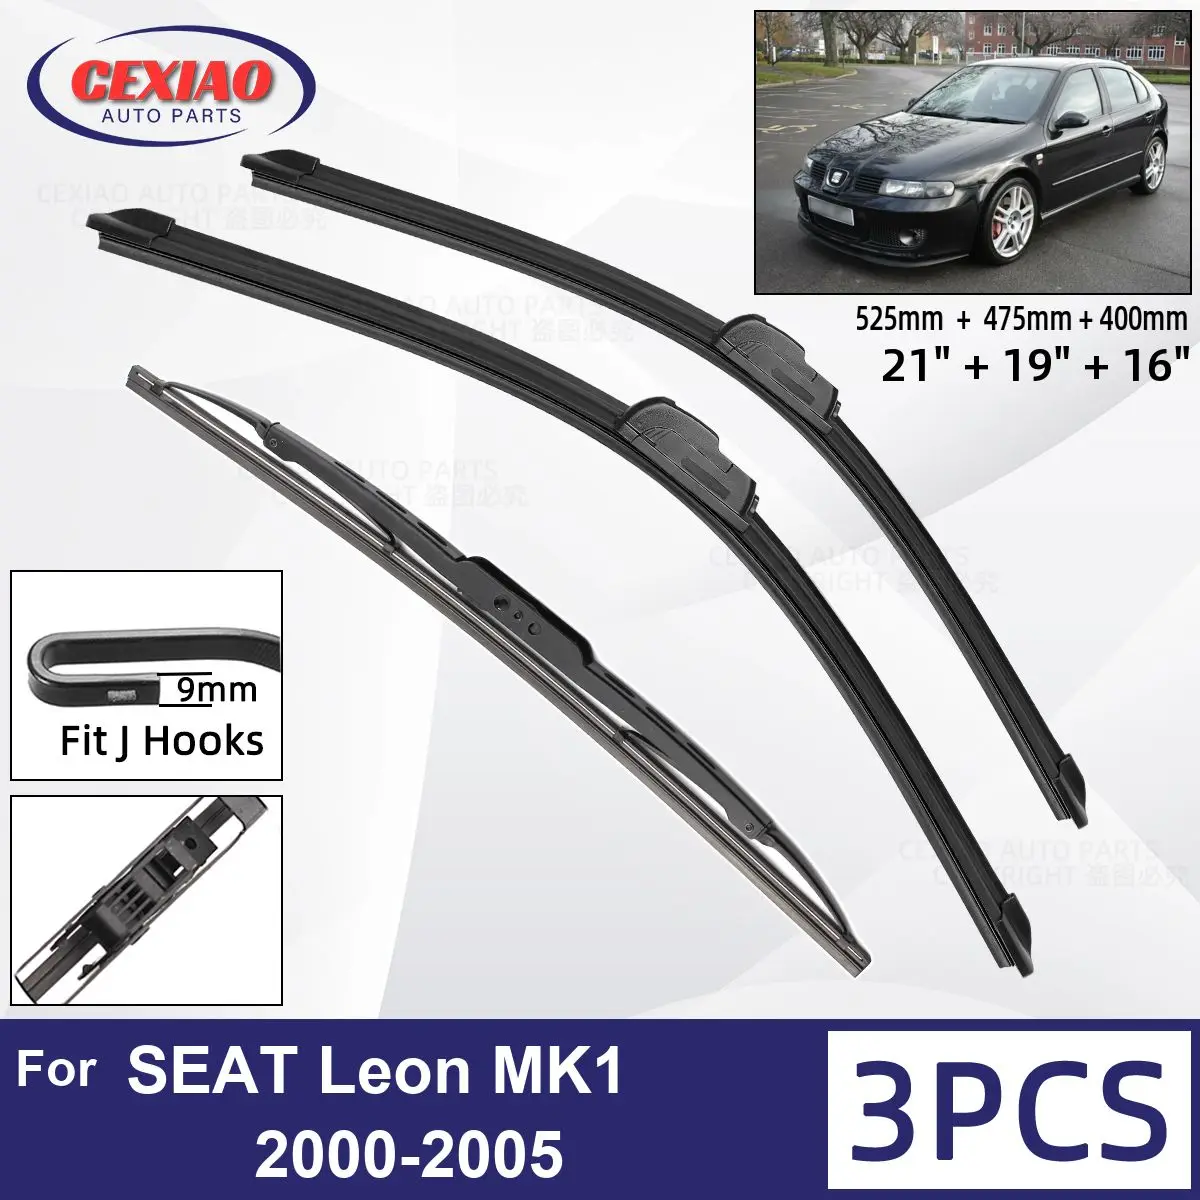 

For SEAT Leon MK1 2000-2005 Car Front Rear Wiper Blades Soft Rubber Windscreen Wipers Auto Windshield 21"+19"+16" 2002 2003 2004